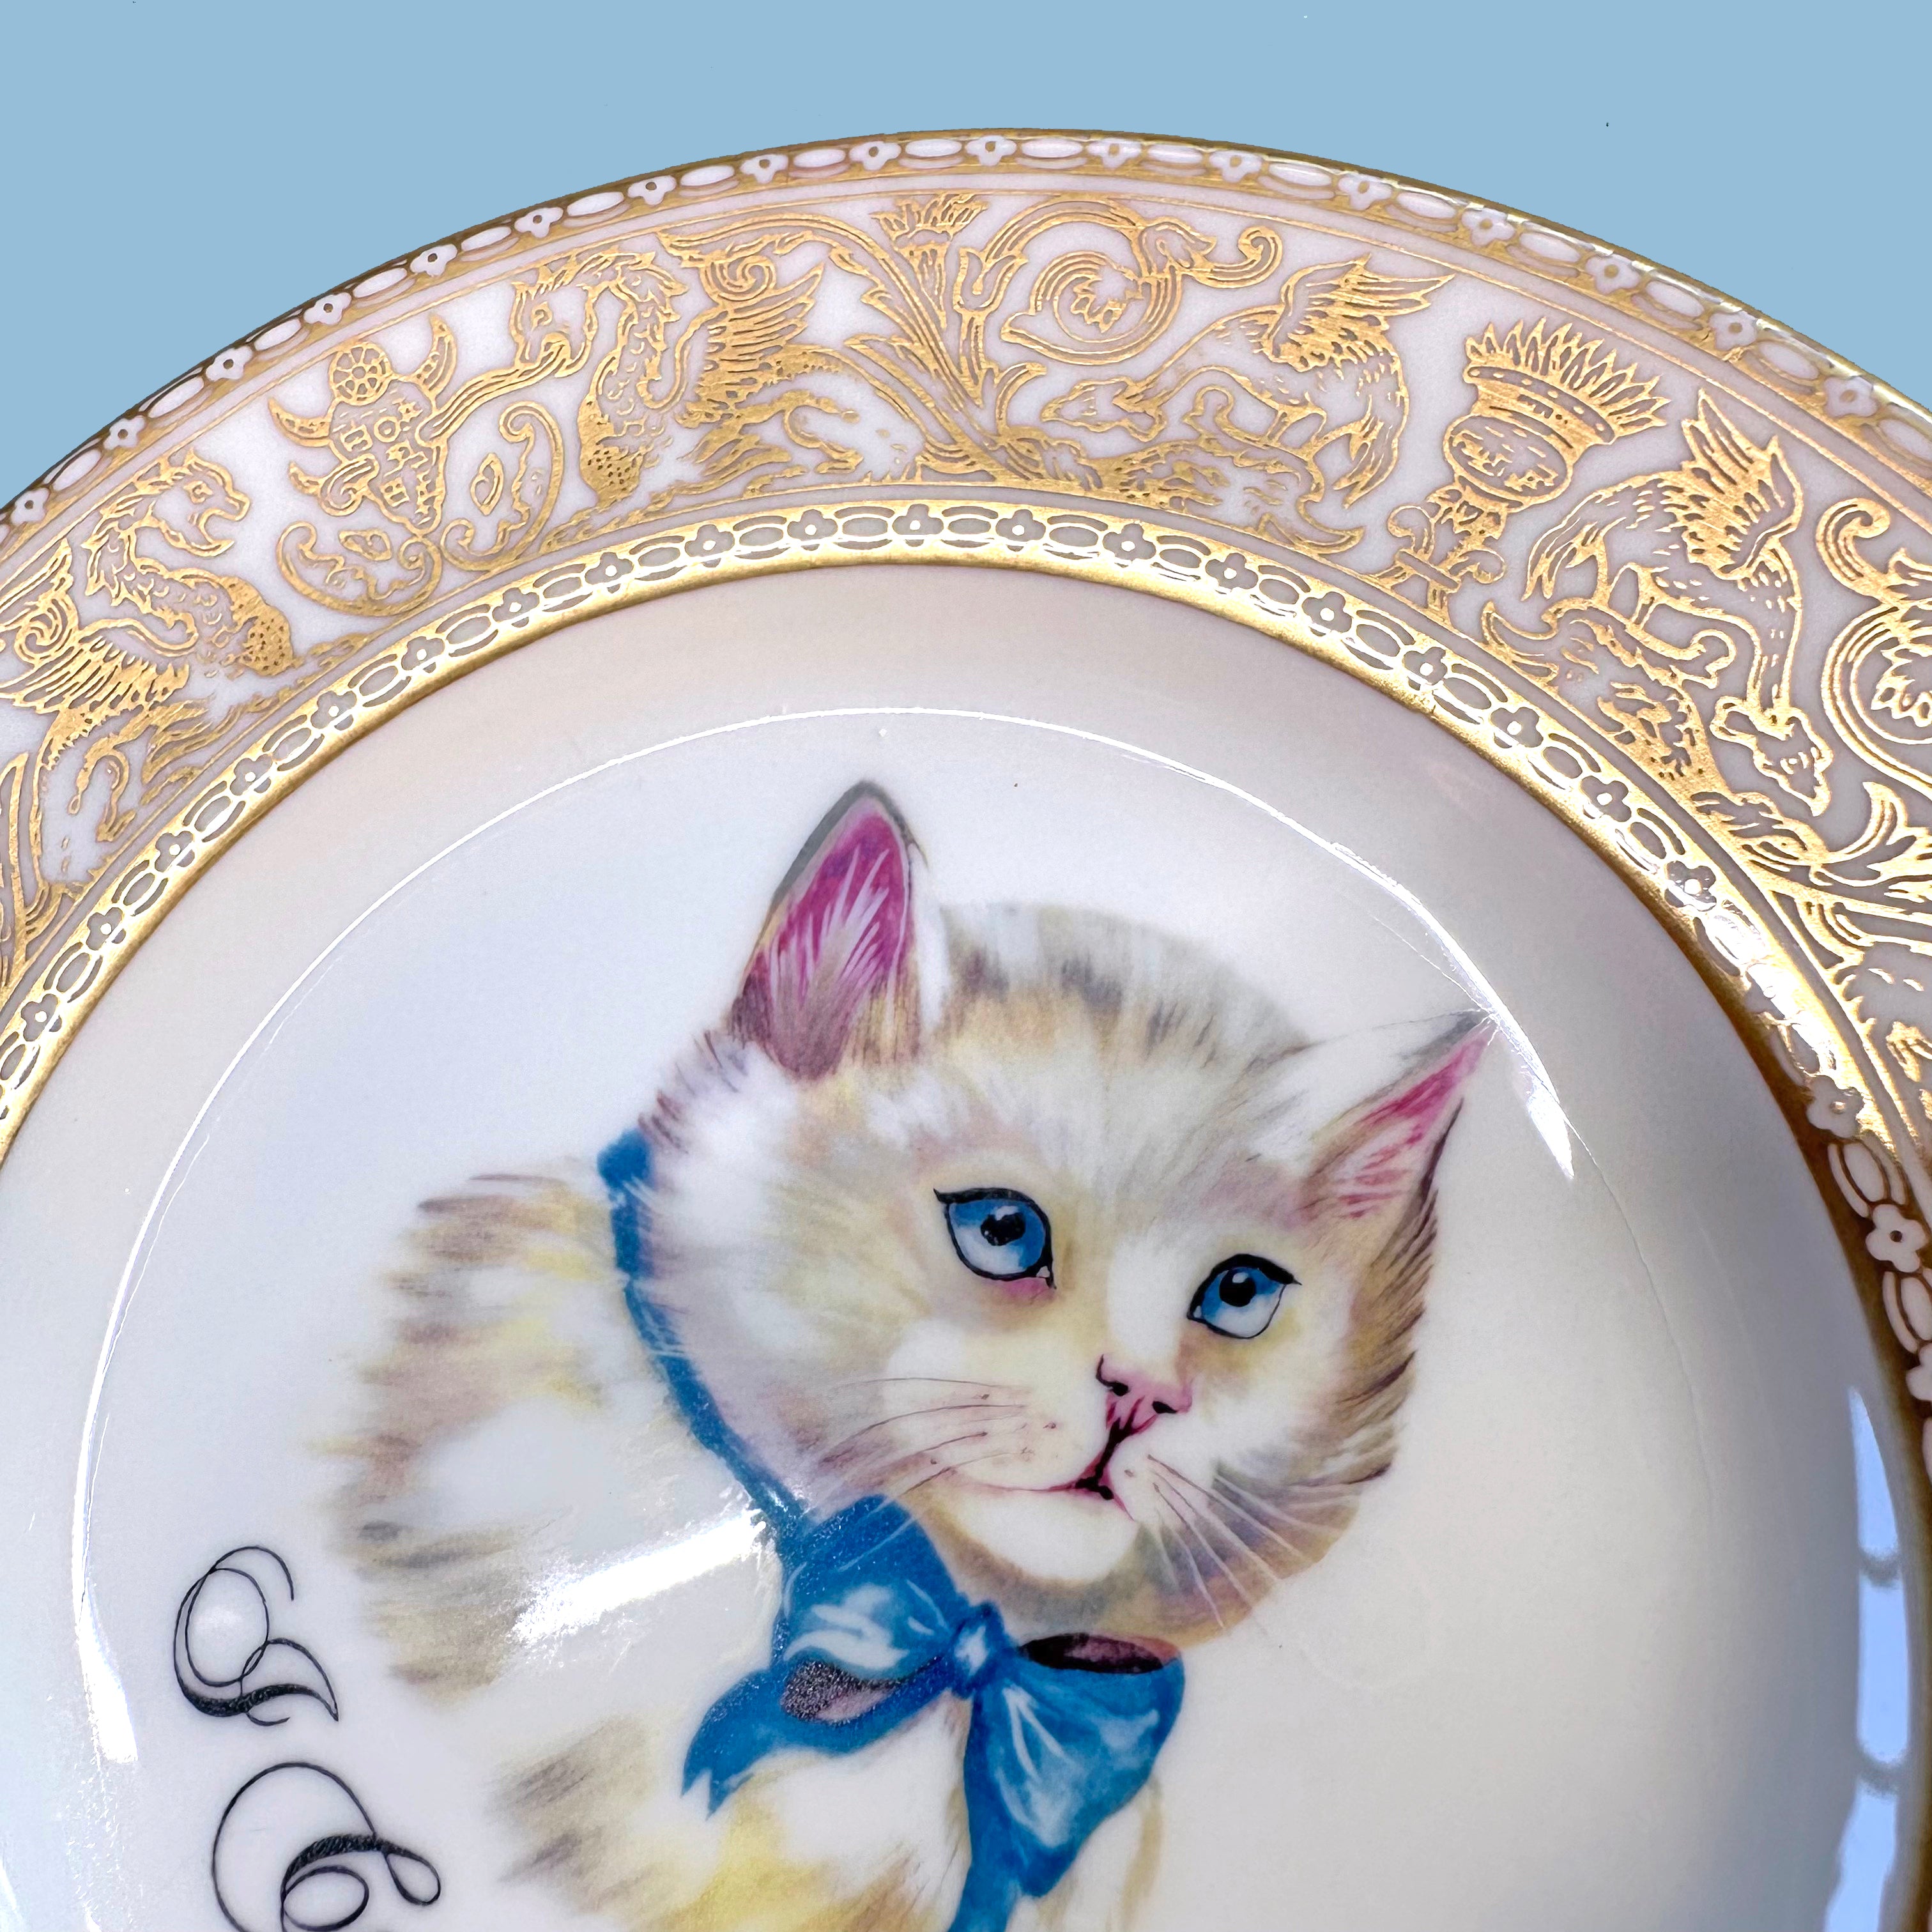 Vintage Art Plate - Cat plate - "I curse you"